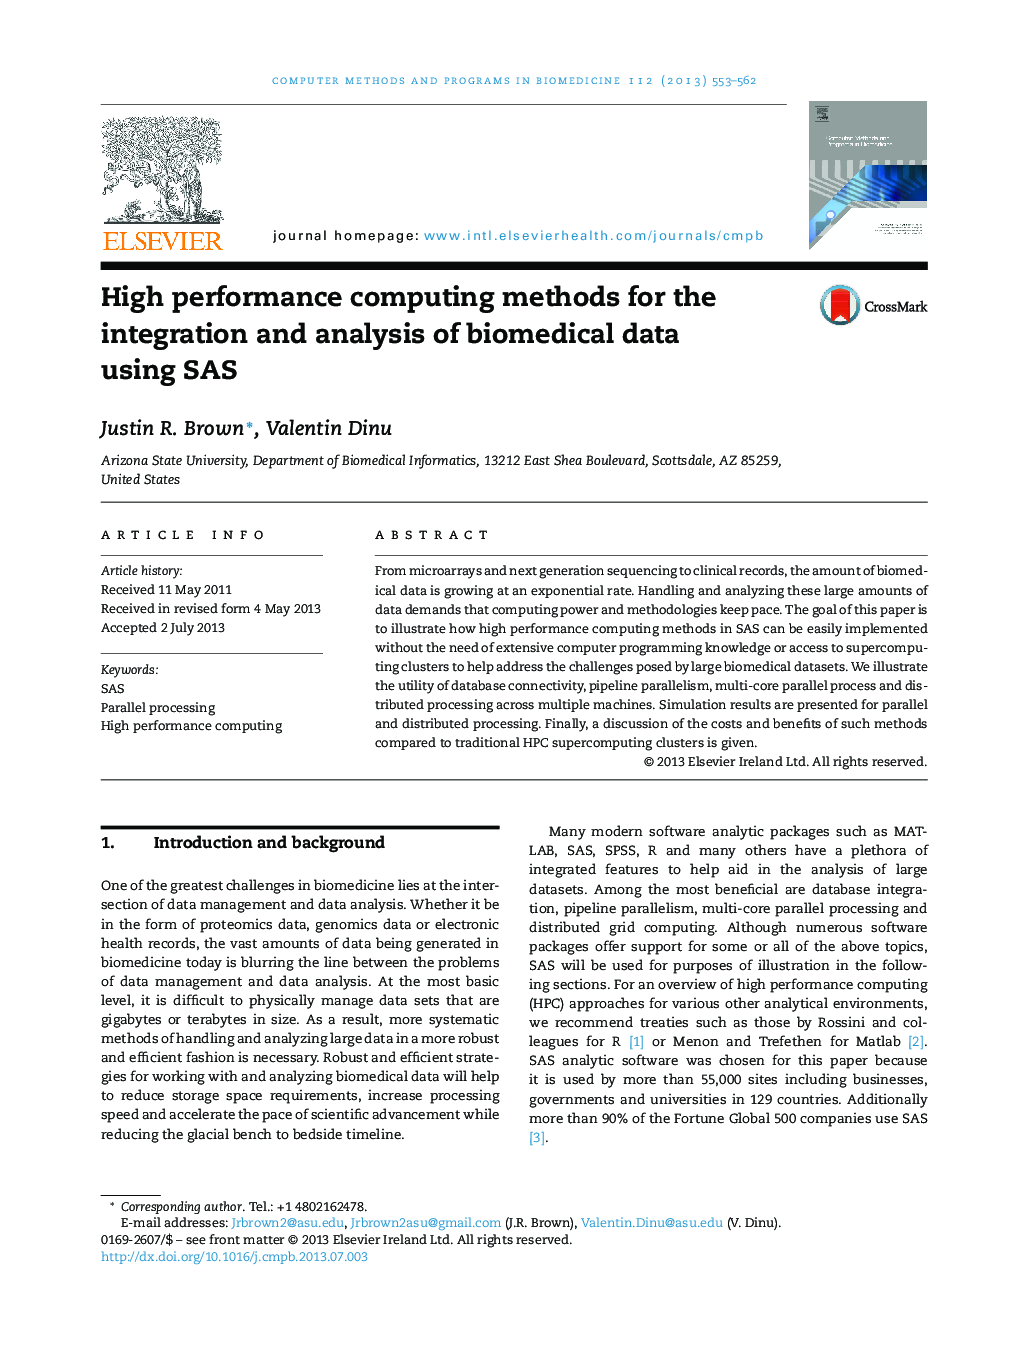 High performance computing methods for the integration and analysis of biomedical data using SAS